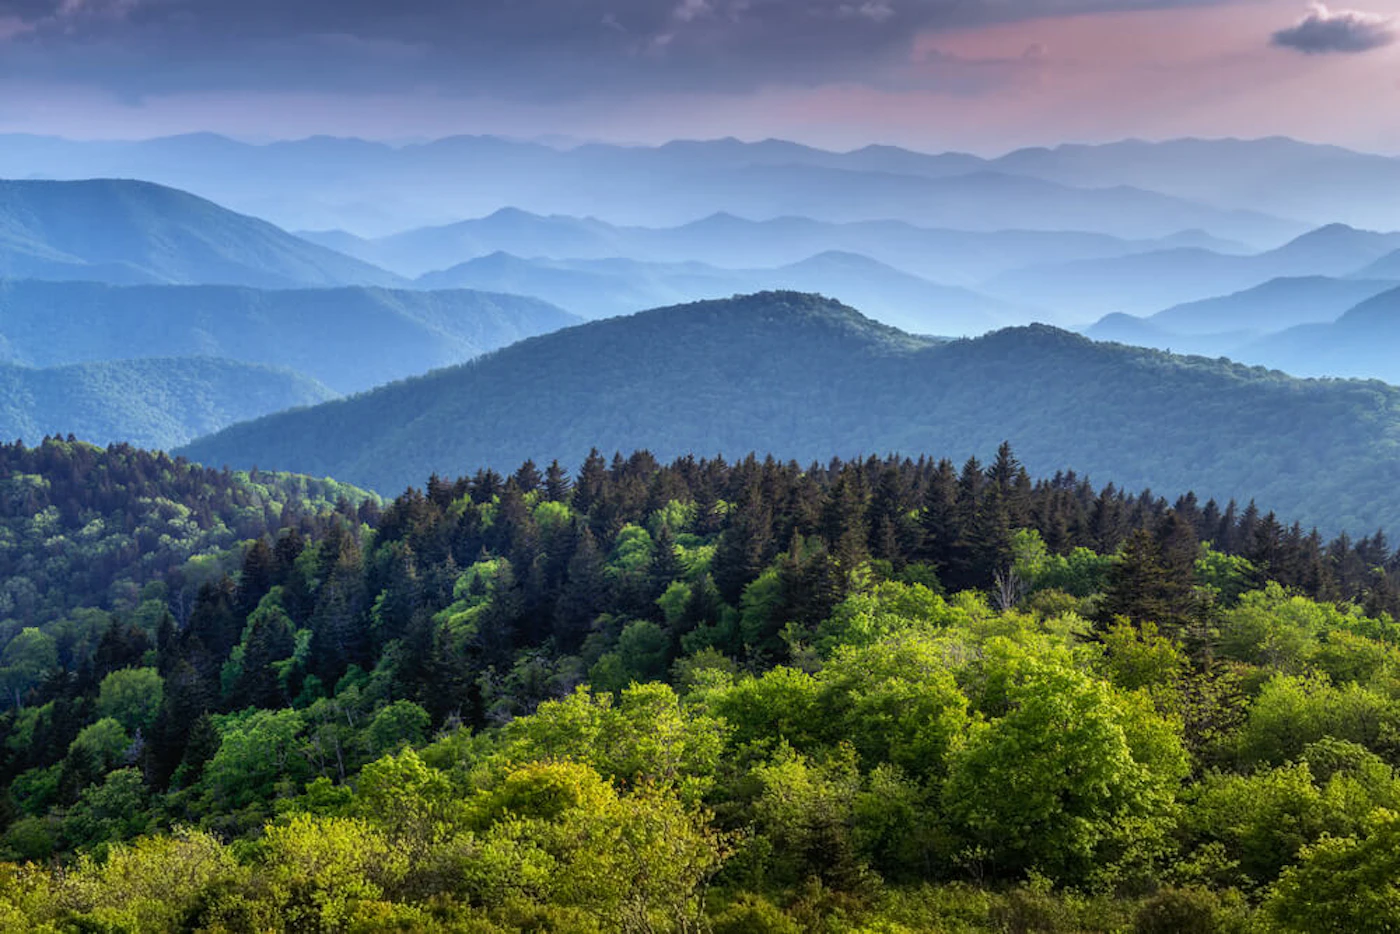 The Great Smokey Mountains of North Carolina. (Image via Shutterstock)